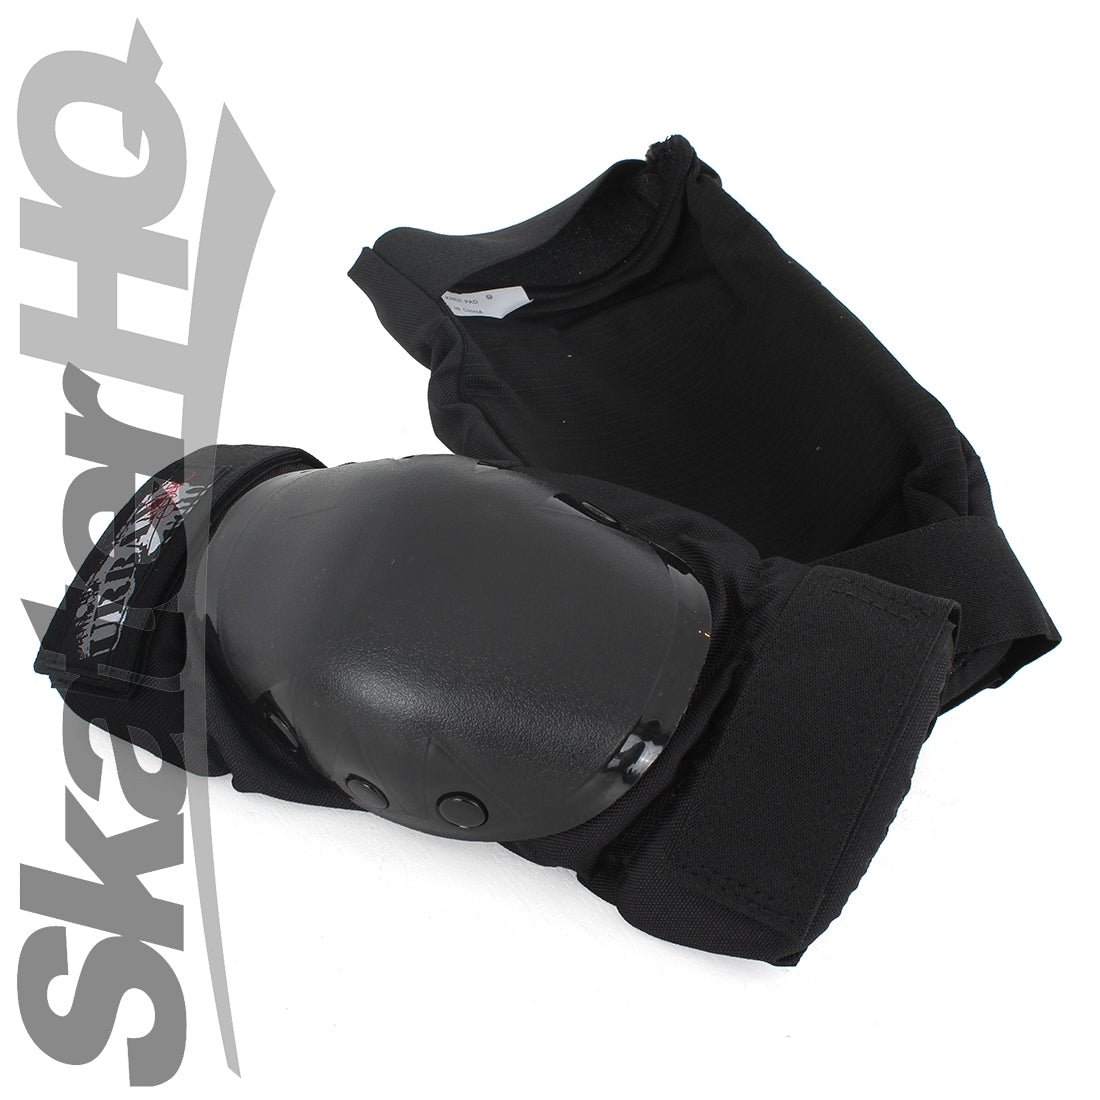 Urban Skater Tri Pack Black - Medium Protective Gear